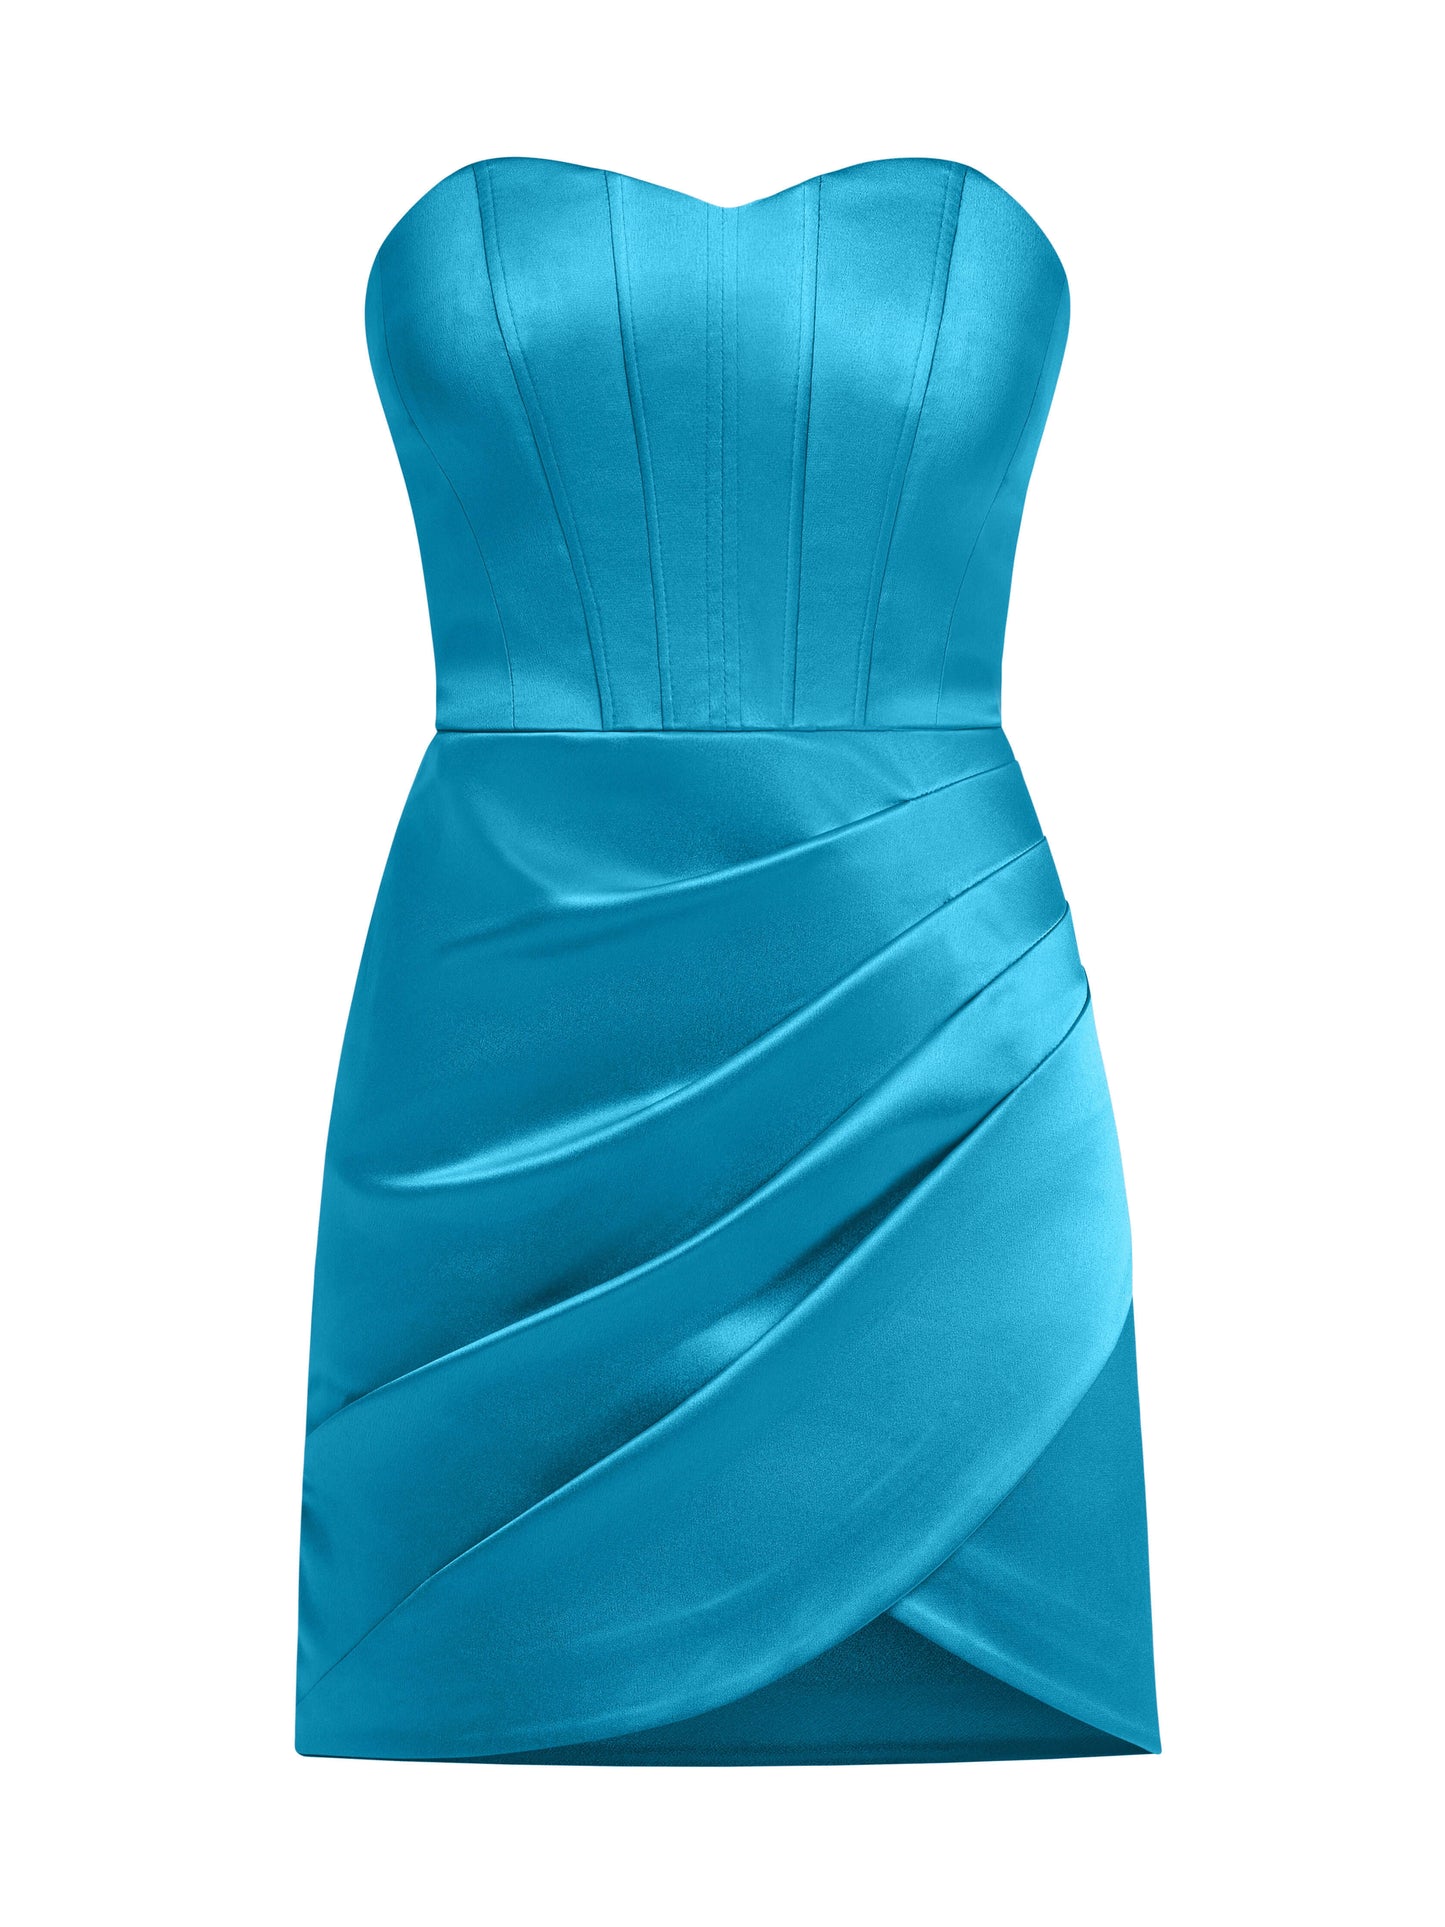 A Touch of Glamour Mini Dress - Capri Blue by Tia Dorraine Women's Luxury Fashion Designer Clothing Brand